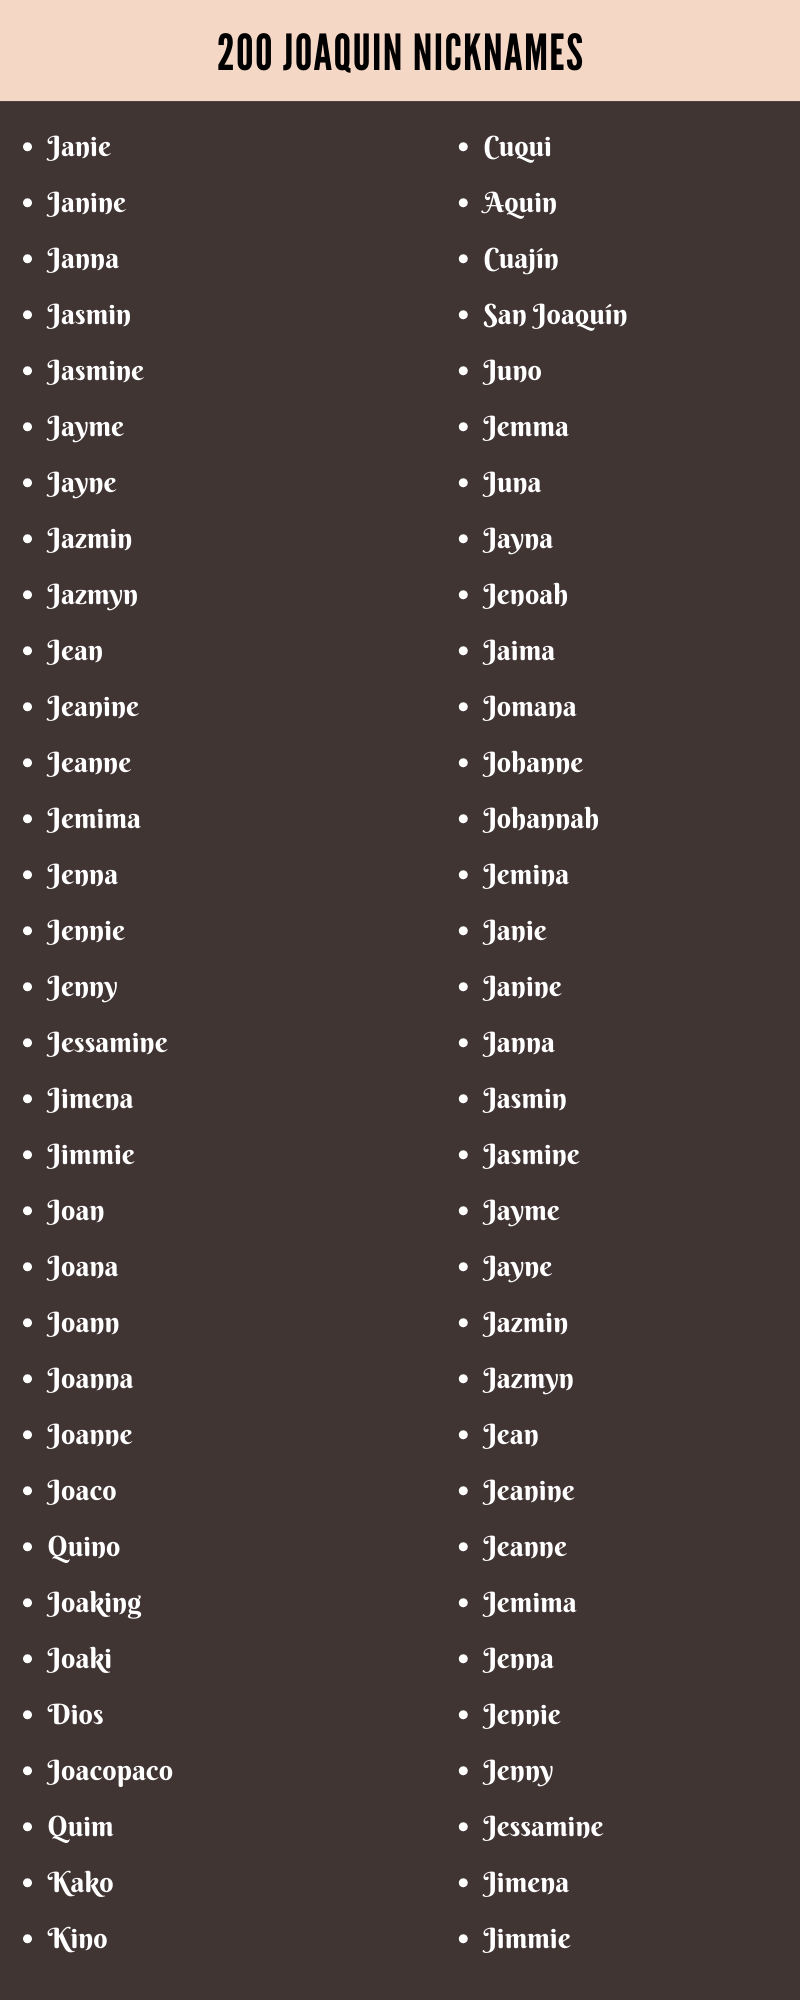 joaquin nicknames 